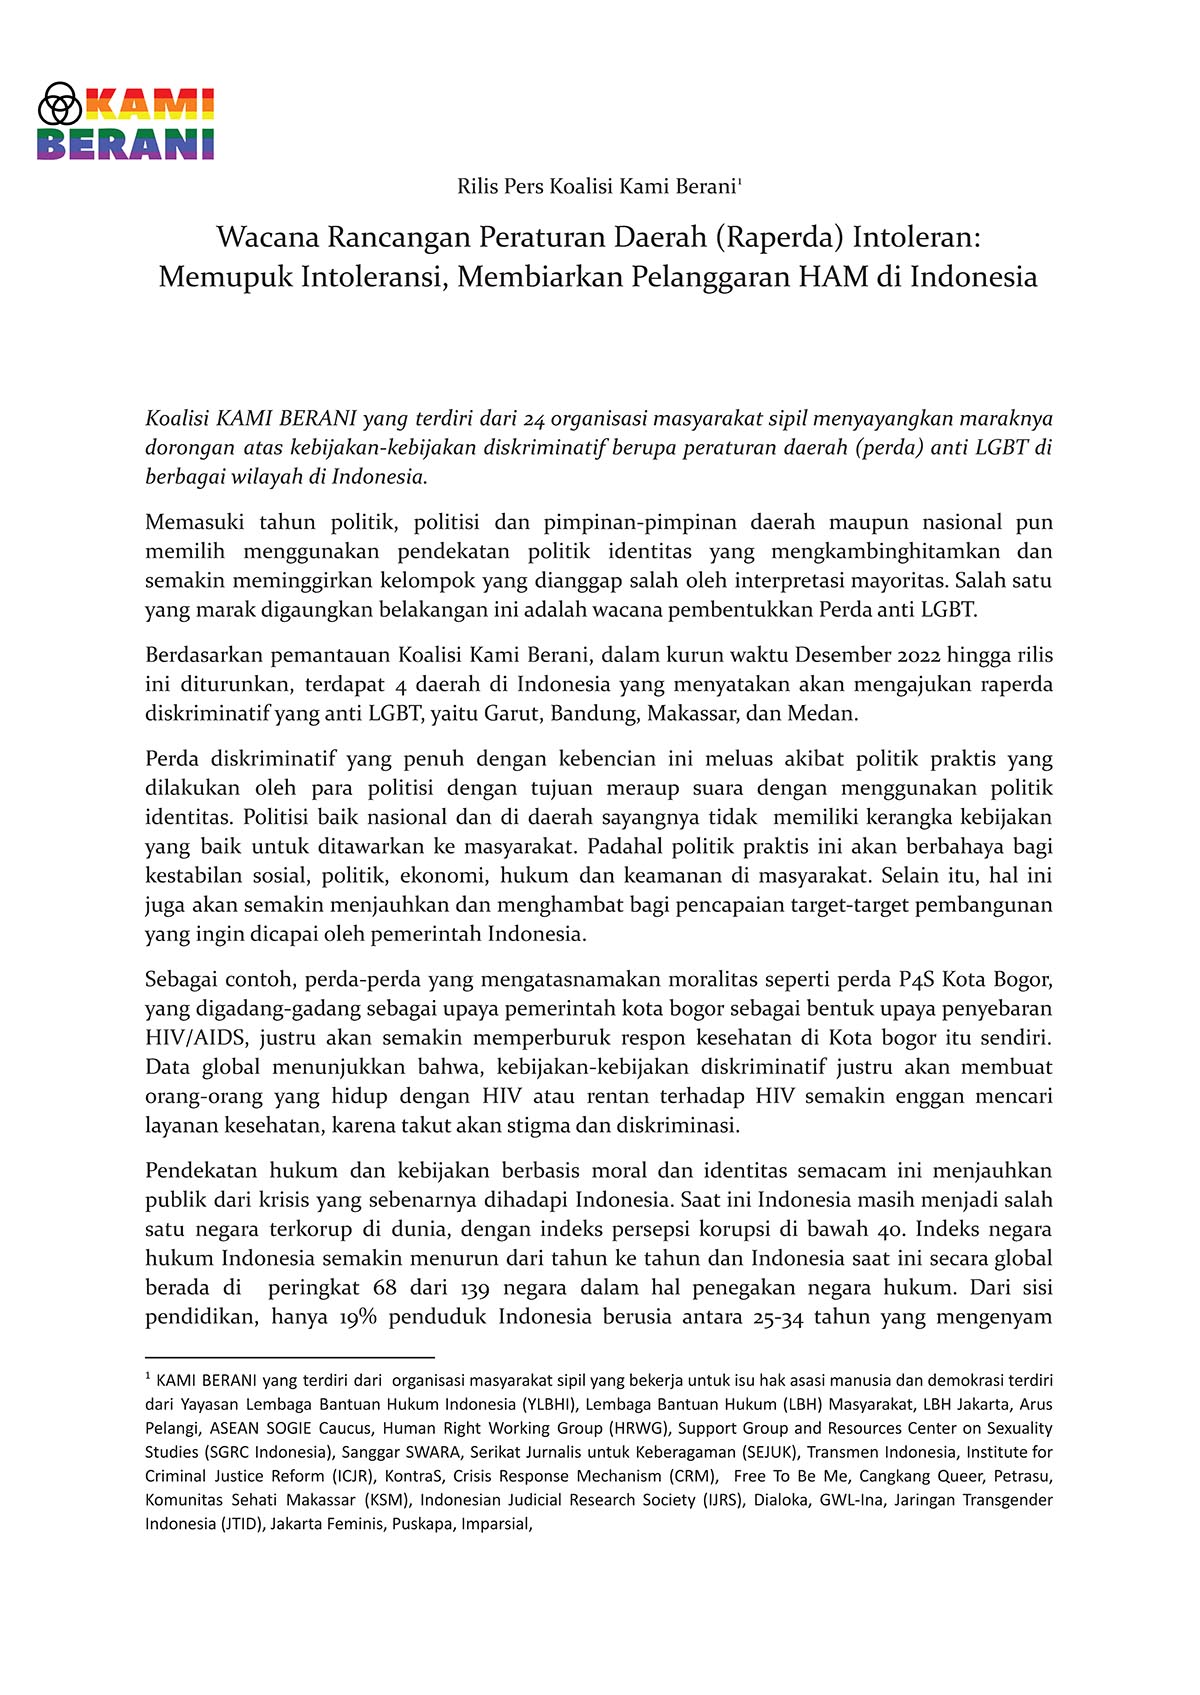 Read more about the article Wacana Rancangan Peraturan Daerah (Raperda) Intoleran: Memupuk Intoleransi, Membiarkan Pelanggaran HAM di Indonesia